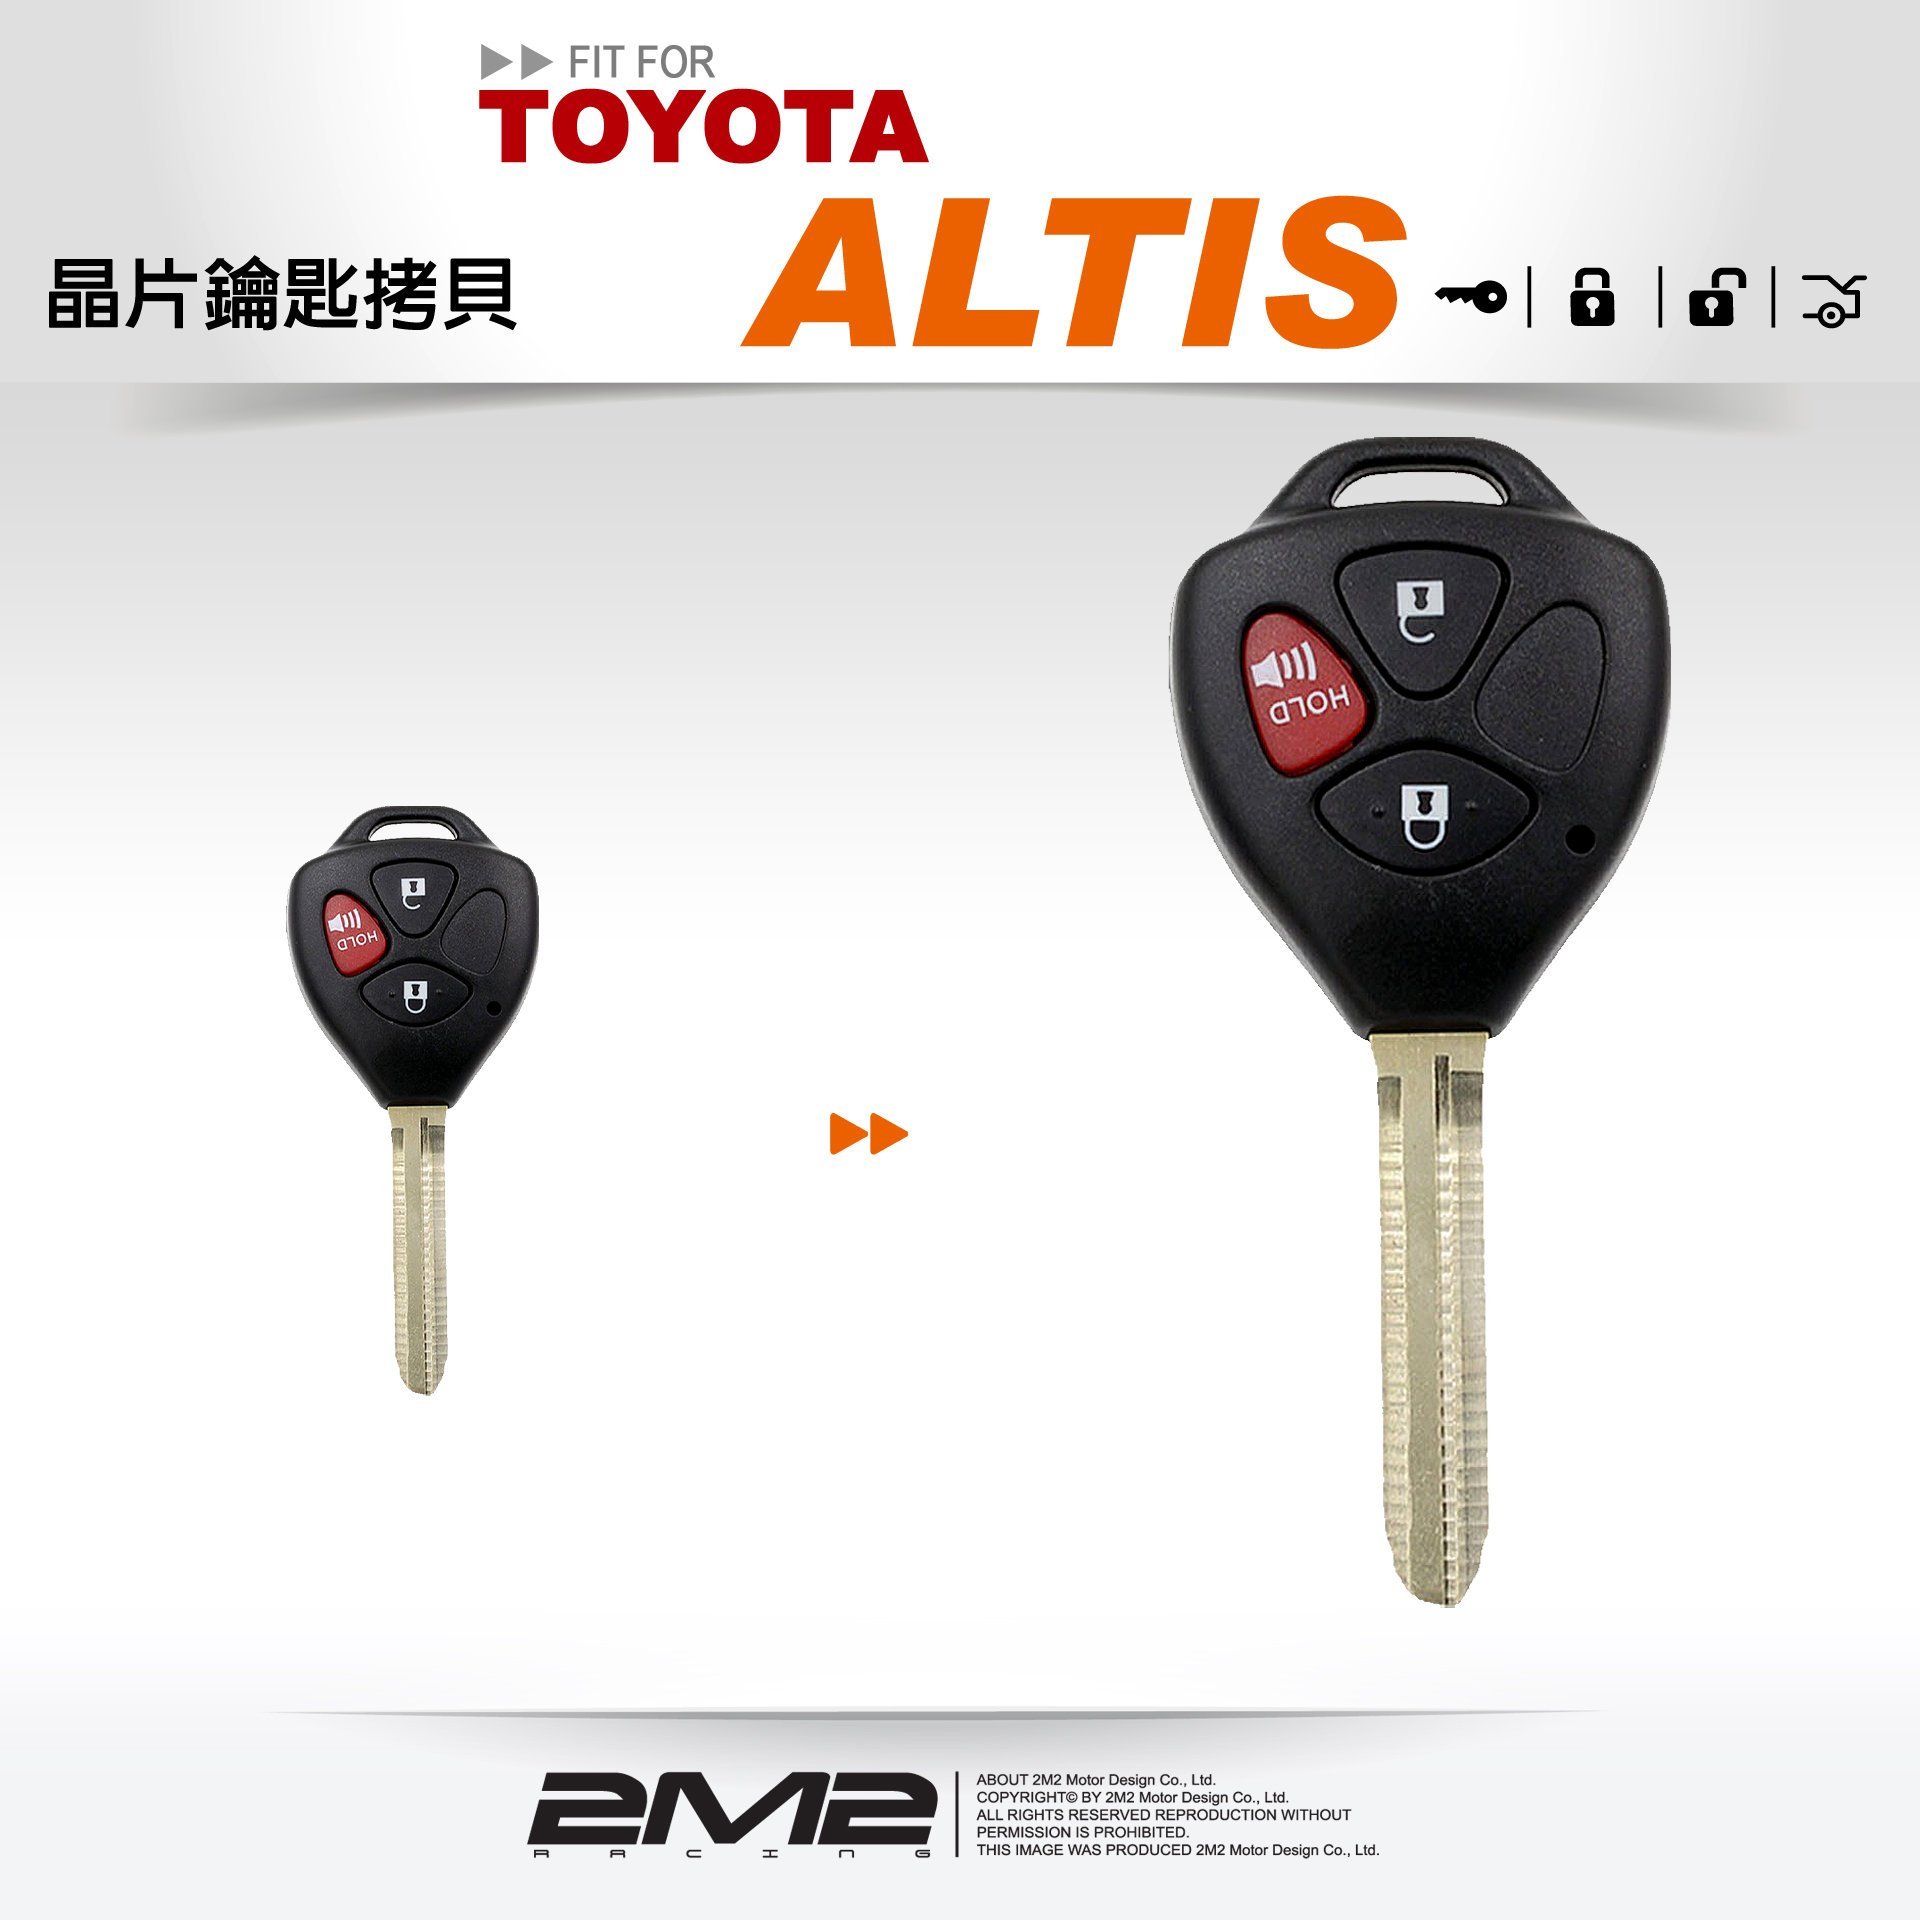 【2M2】TOYOTA ALTIS 汽車鑰匙遙控器 遺失拷貝 新增鑰匙 複製鑰匙 刻打鑰匙 鑰匙壞掉